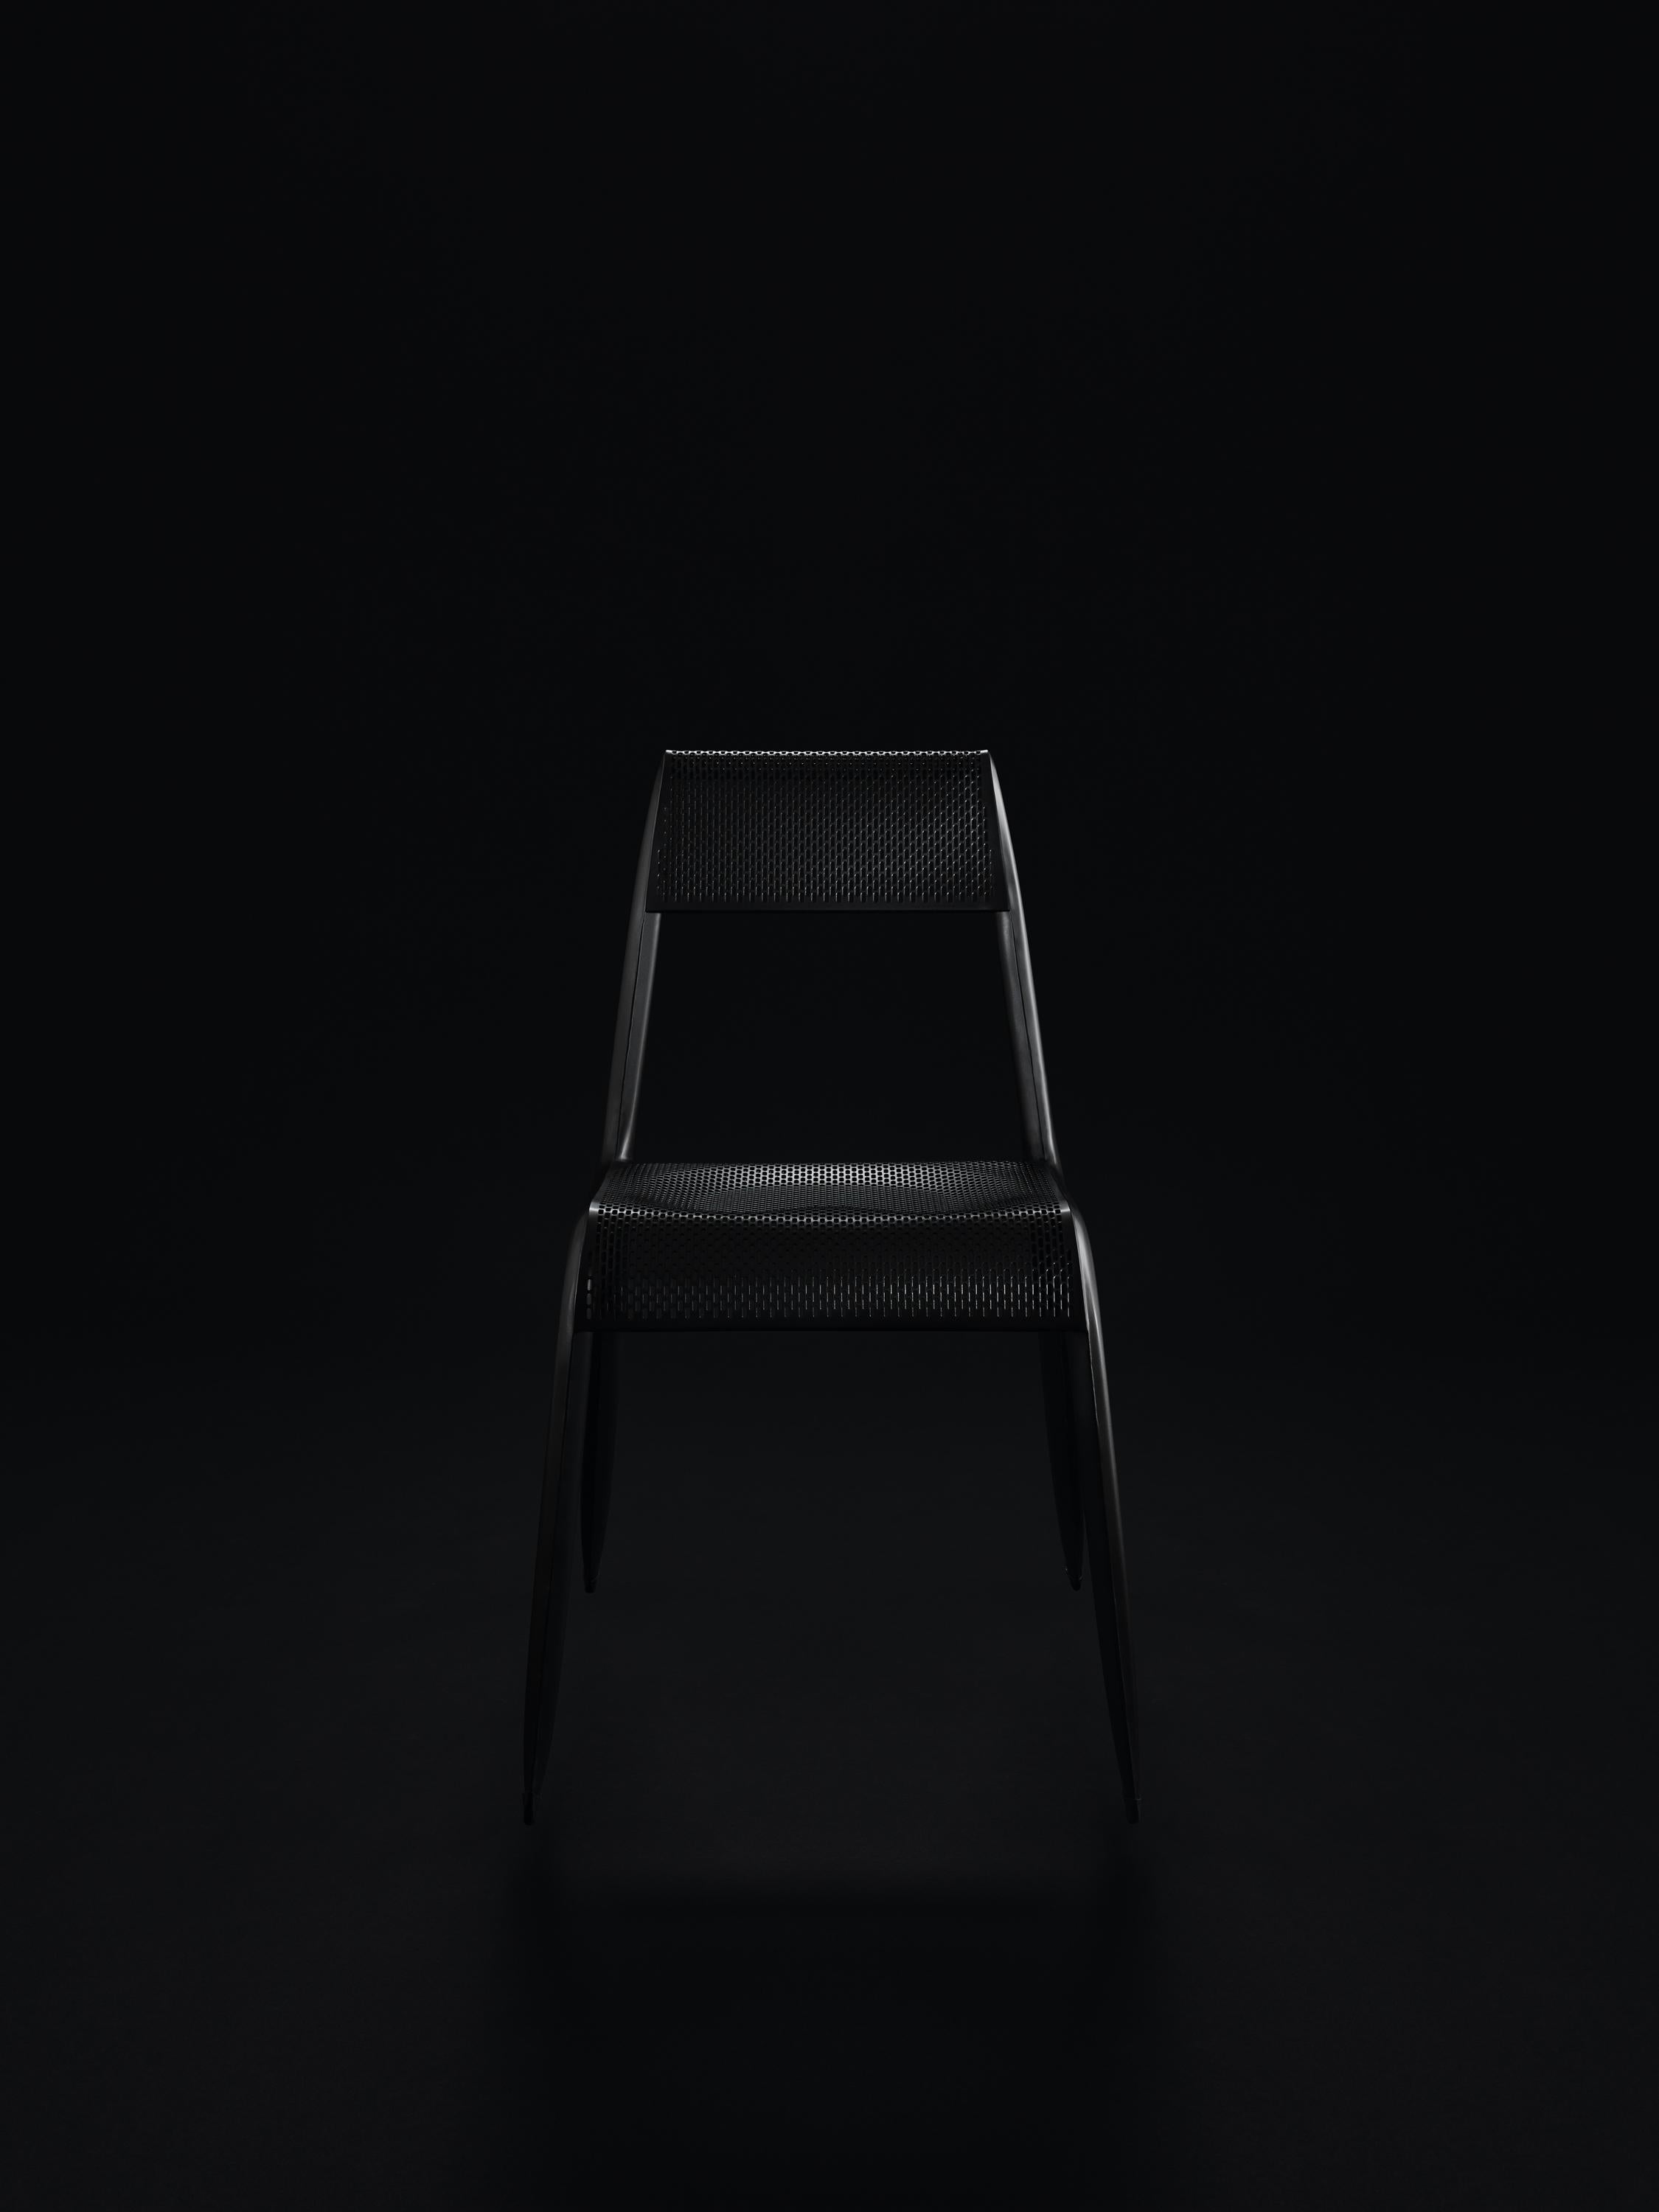 Black Leggera Chair by Zieta For Sale 7